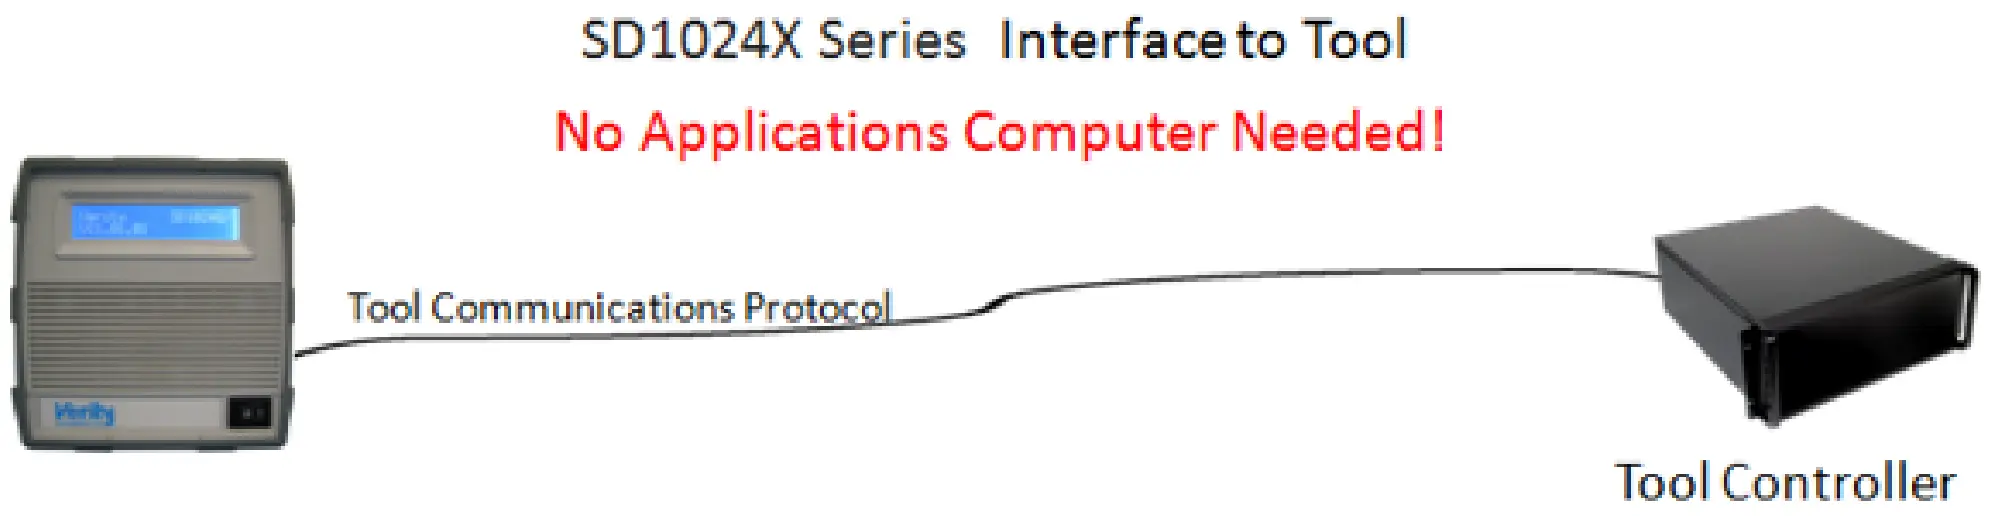 SD1024Xシリーズのシステム接続形態